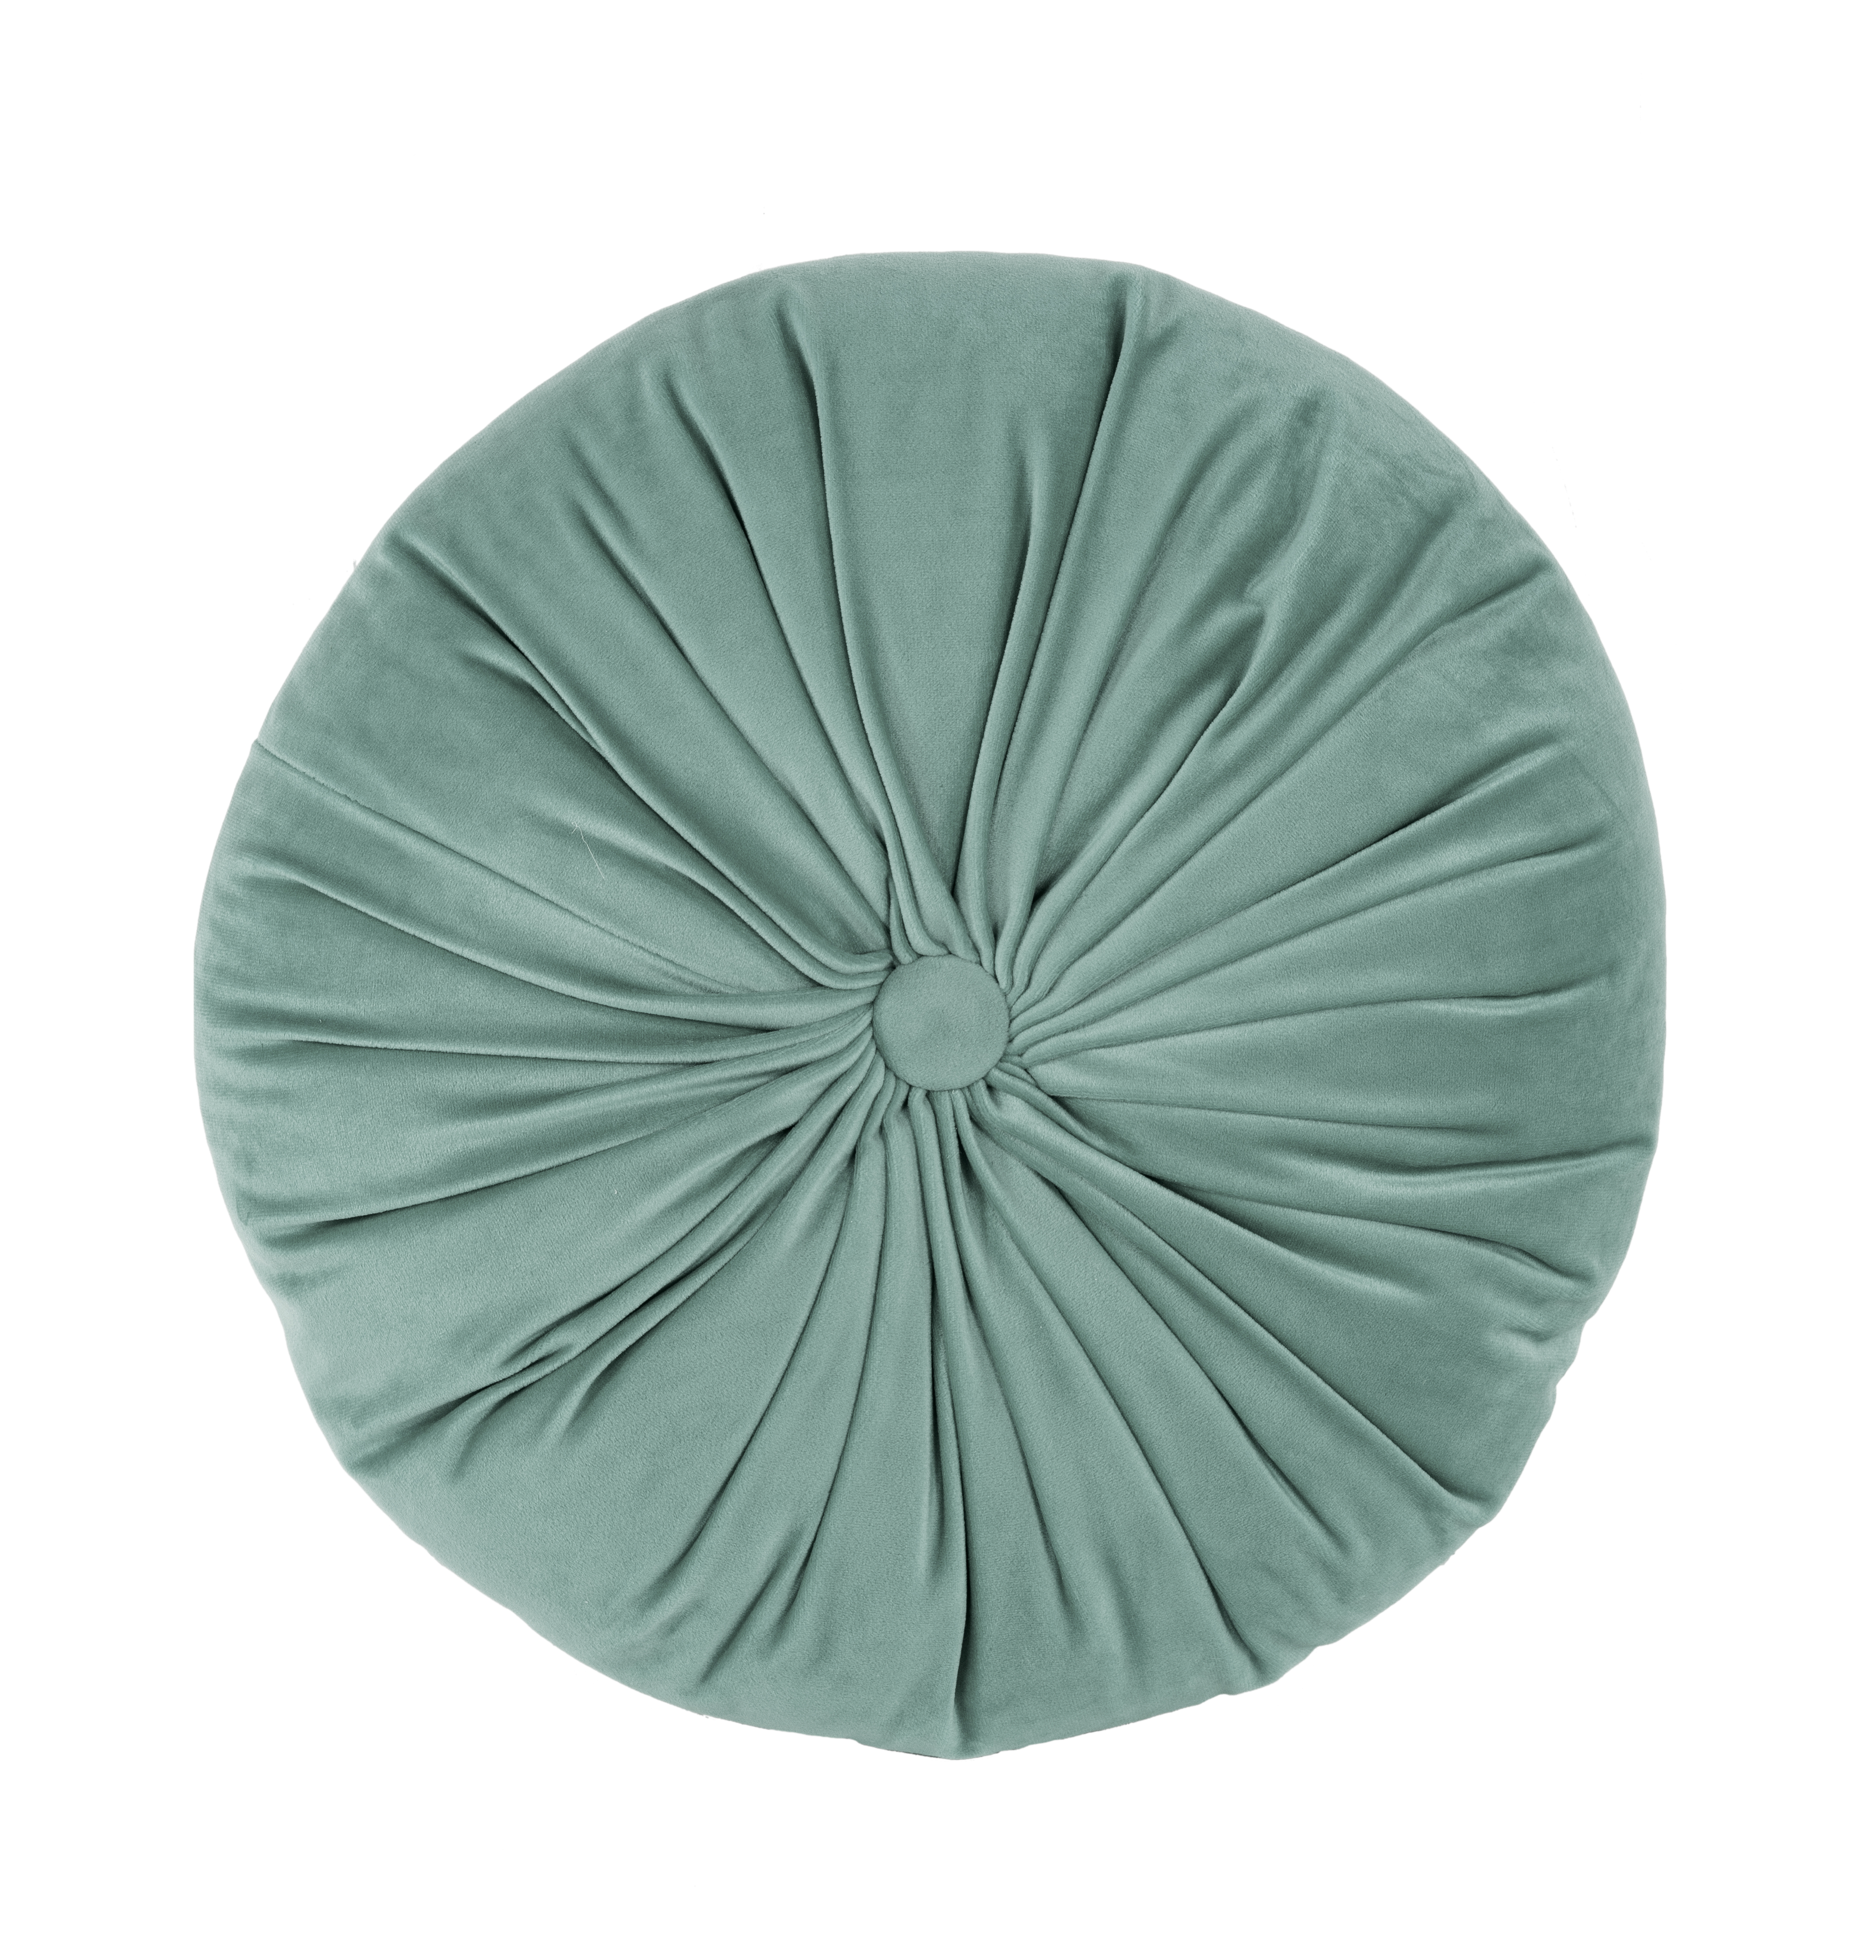 Cushion (filled) Microvelvet stone green ROUND (1 button)